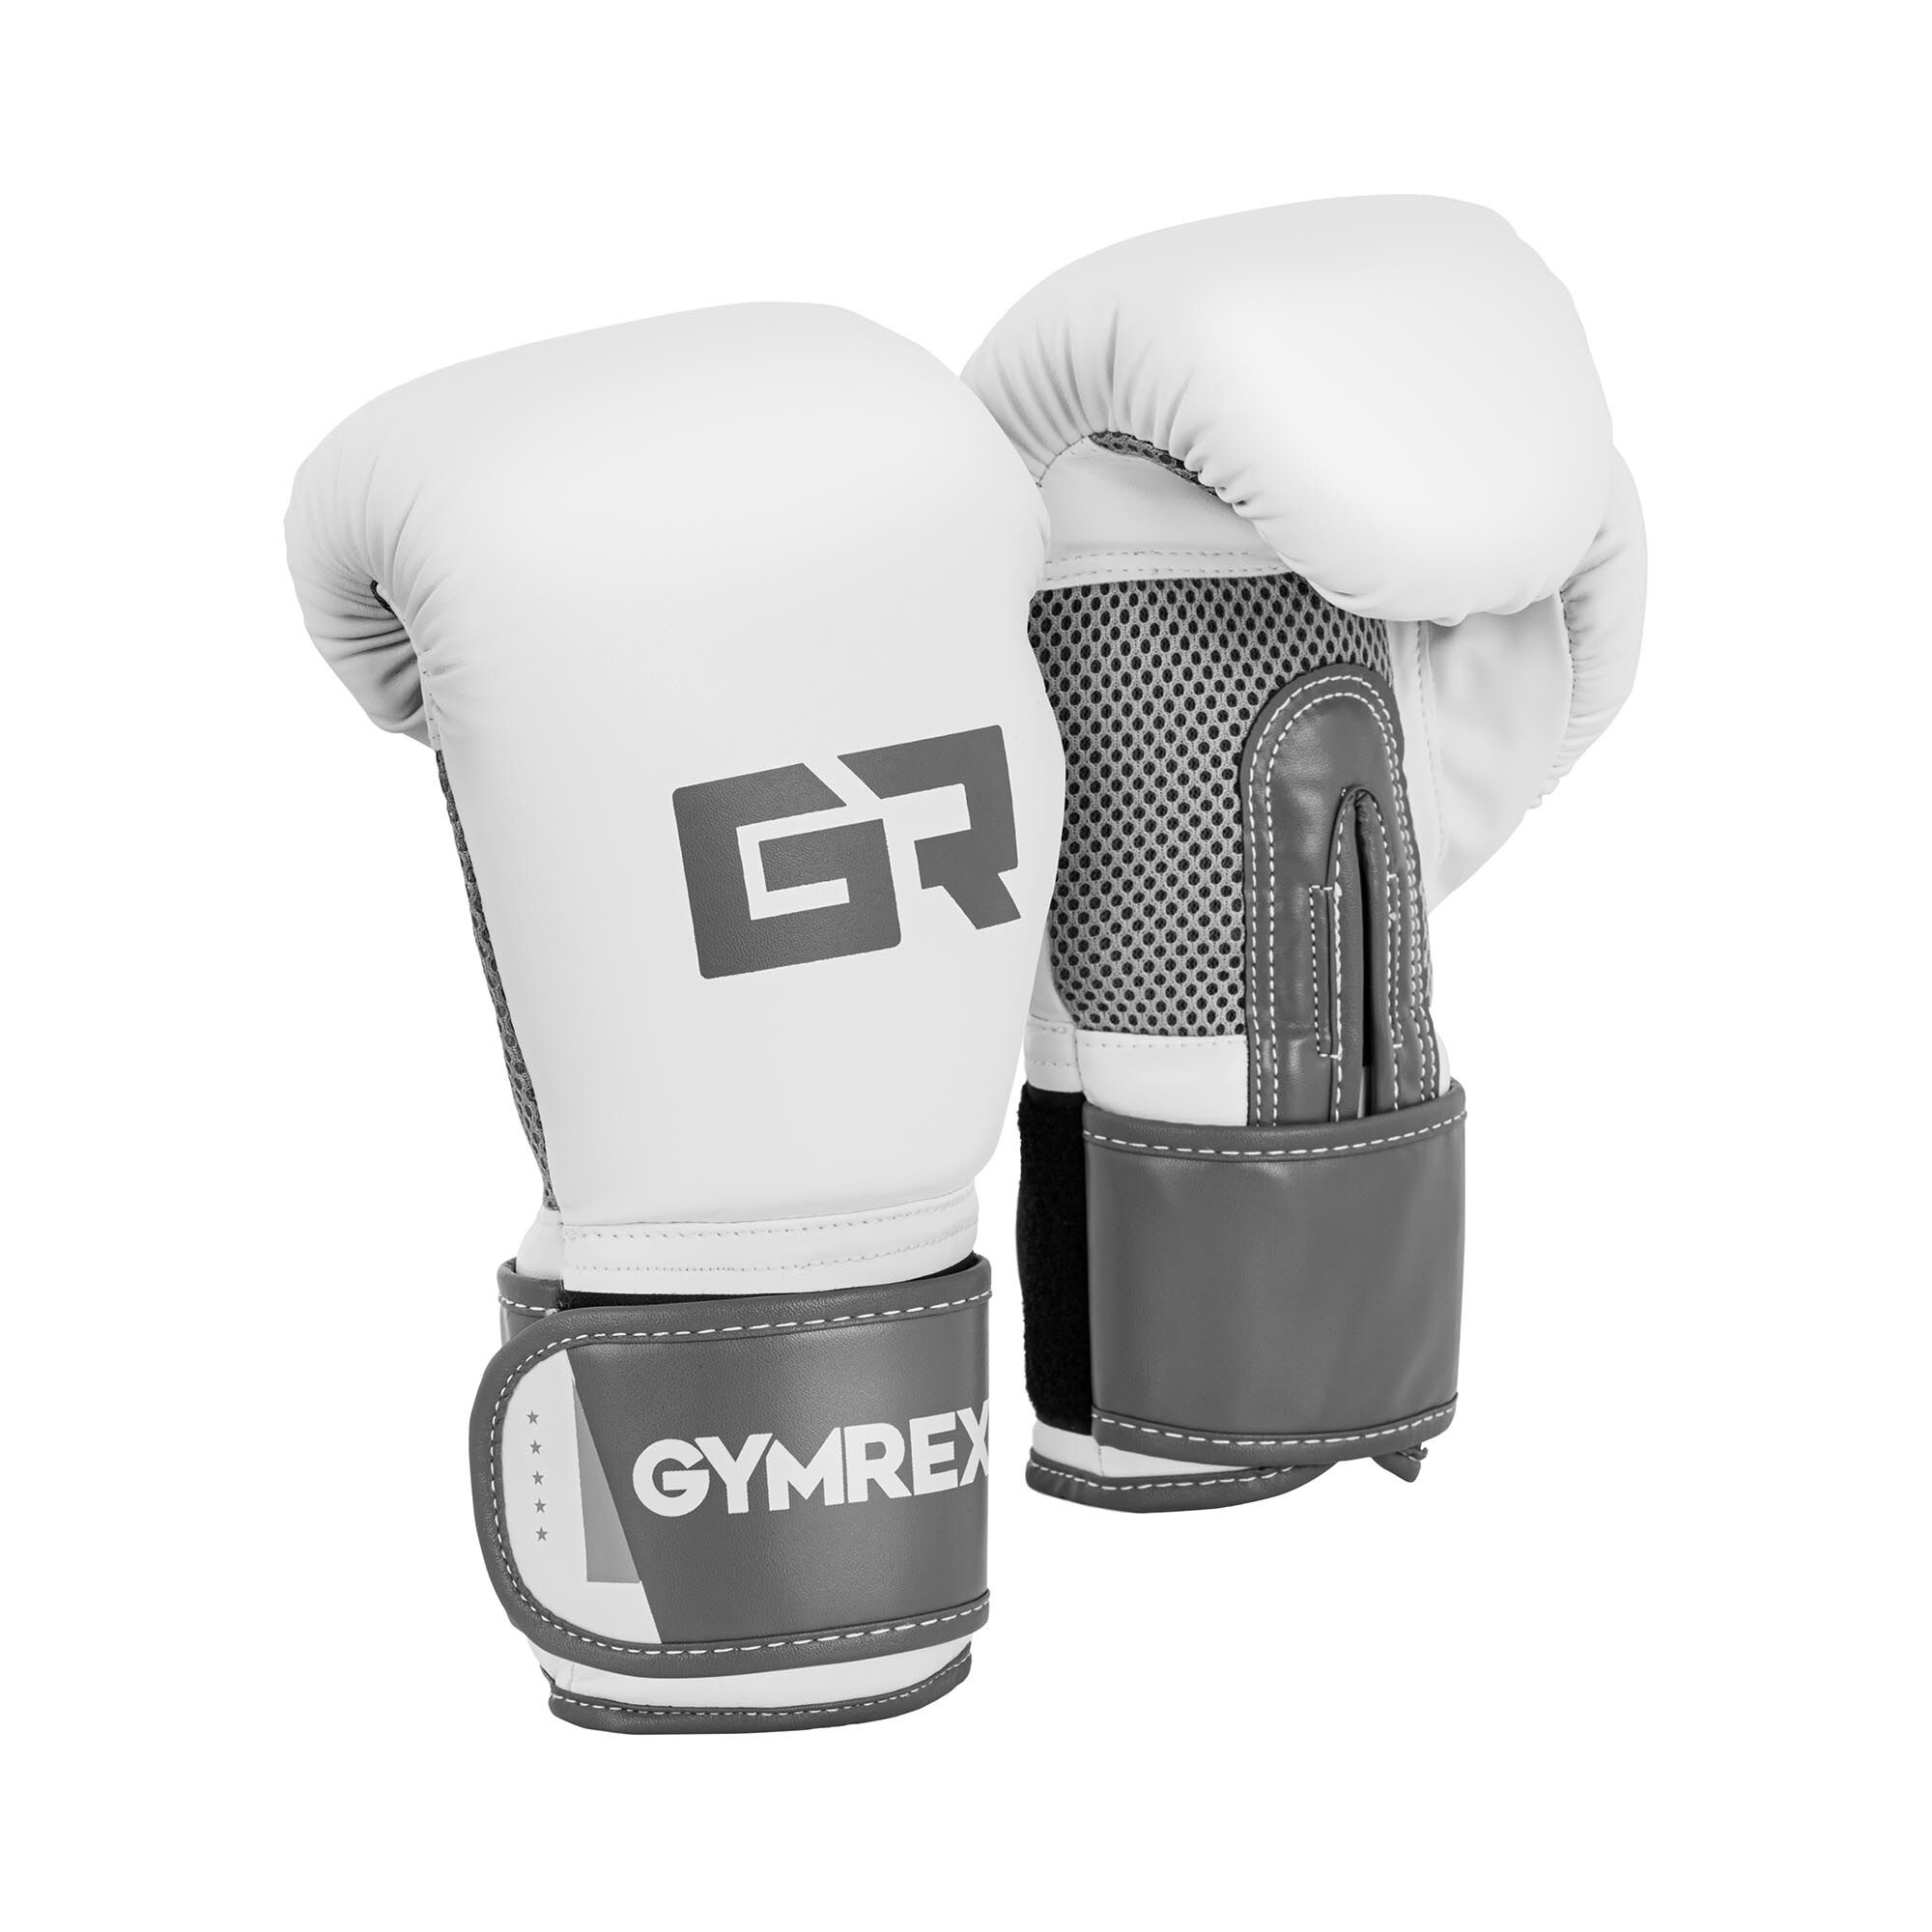 Gymrex Boxing Gloves - 8 oz - interior mesh - white and light metallic grey GR-BG 8B